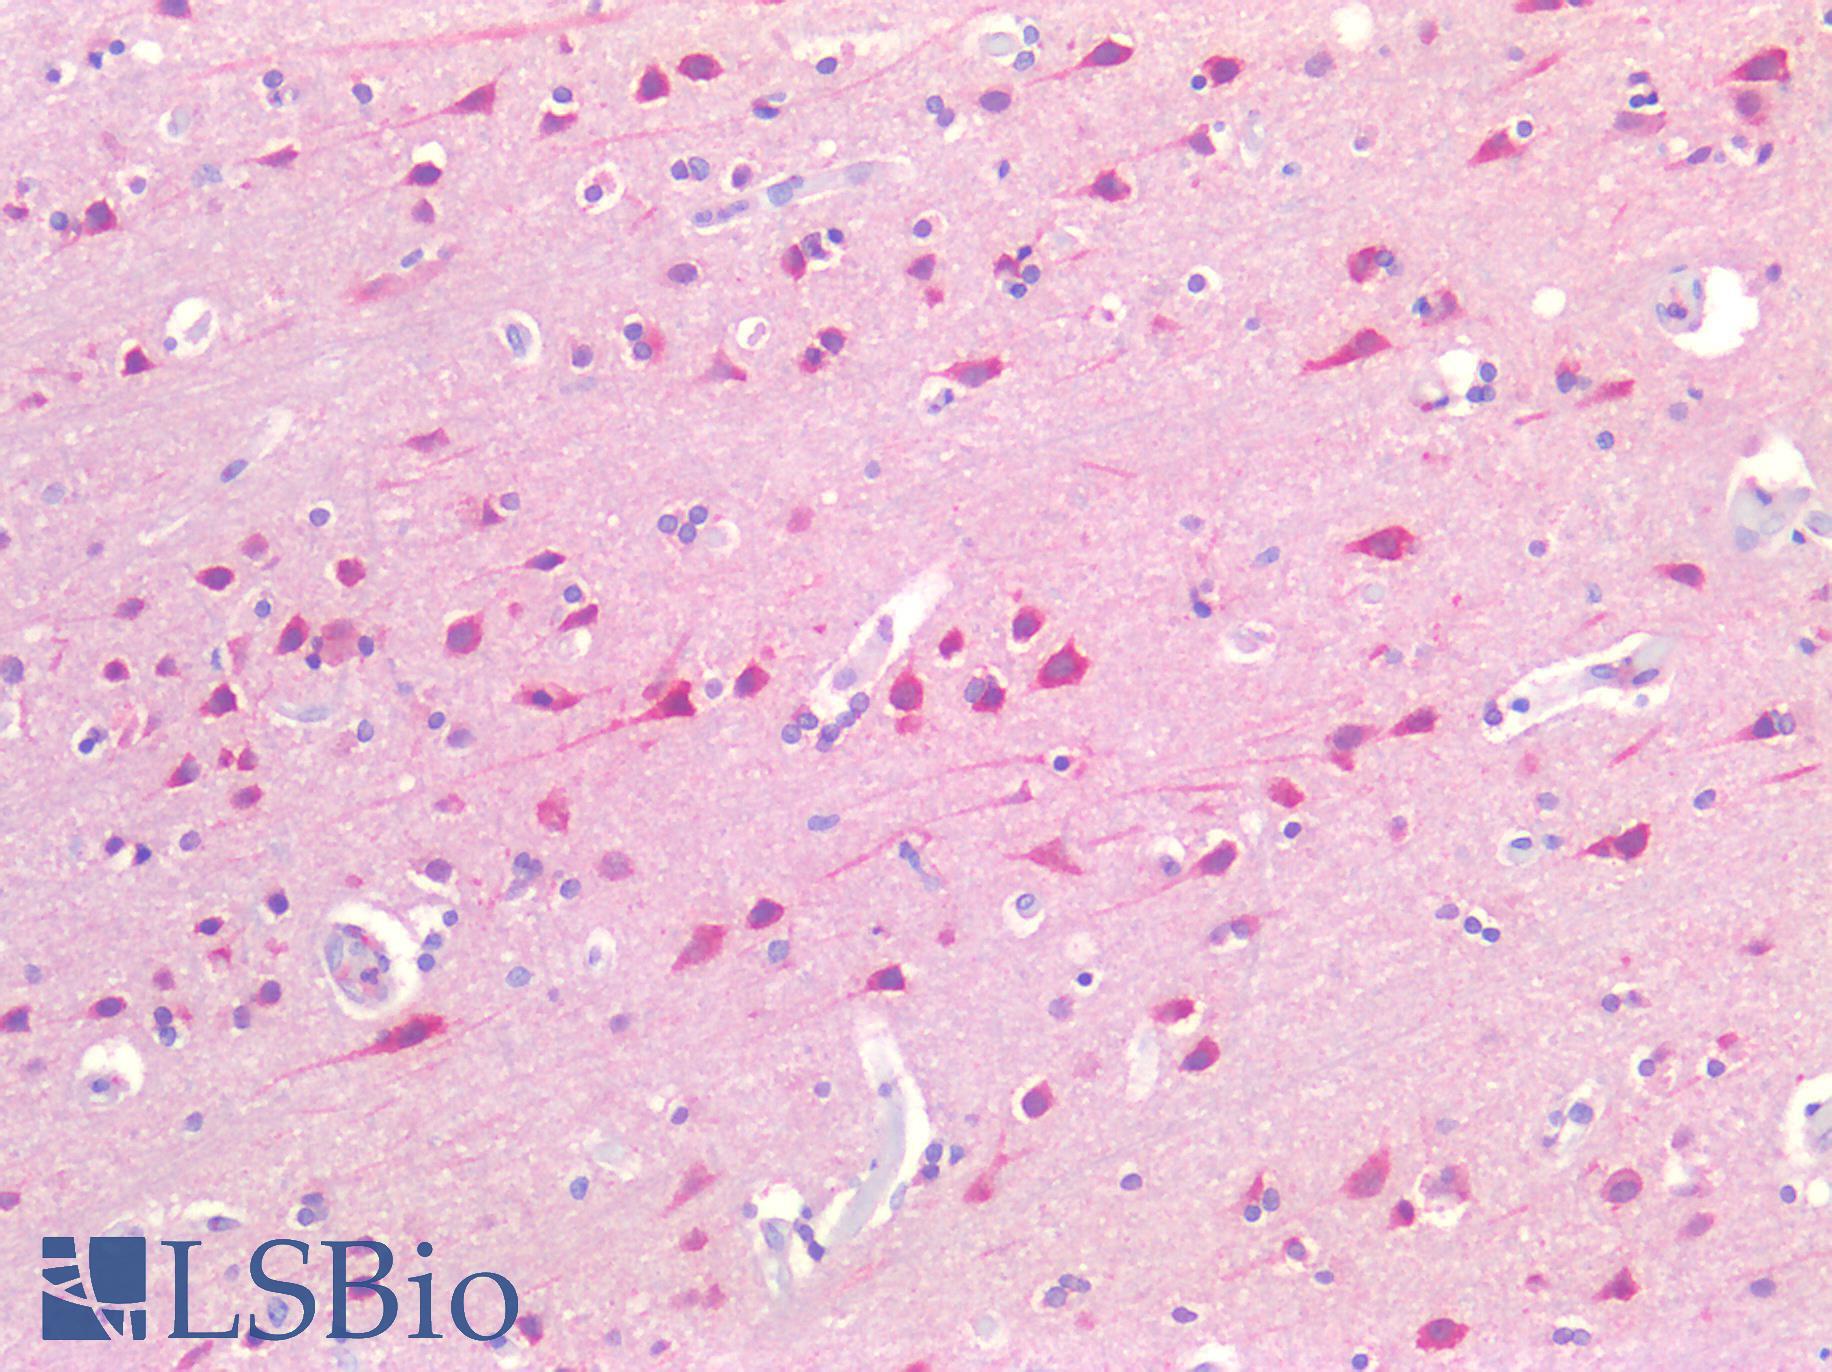 FOLH1 / PSMA Antibody - Human Brain, Cortex: Formalin-Fixed, Paraffin-Embedded (FFPE)